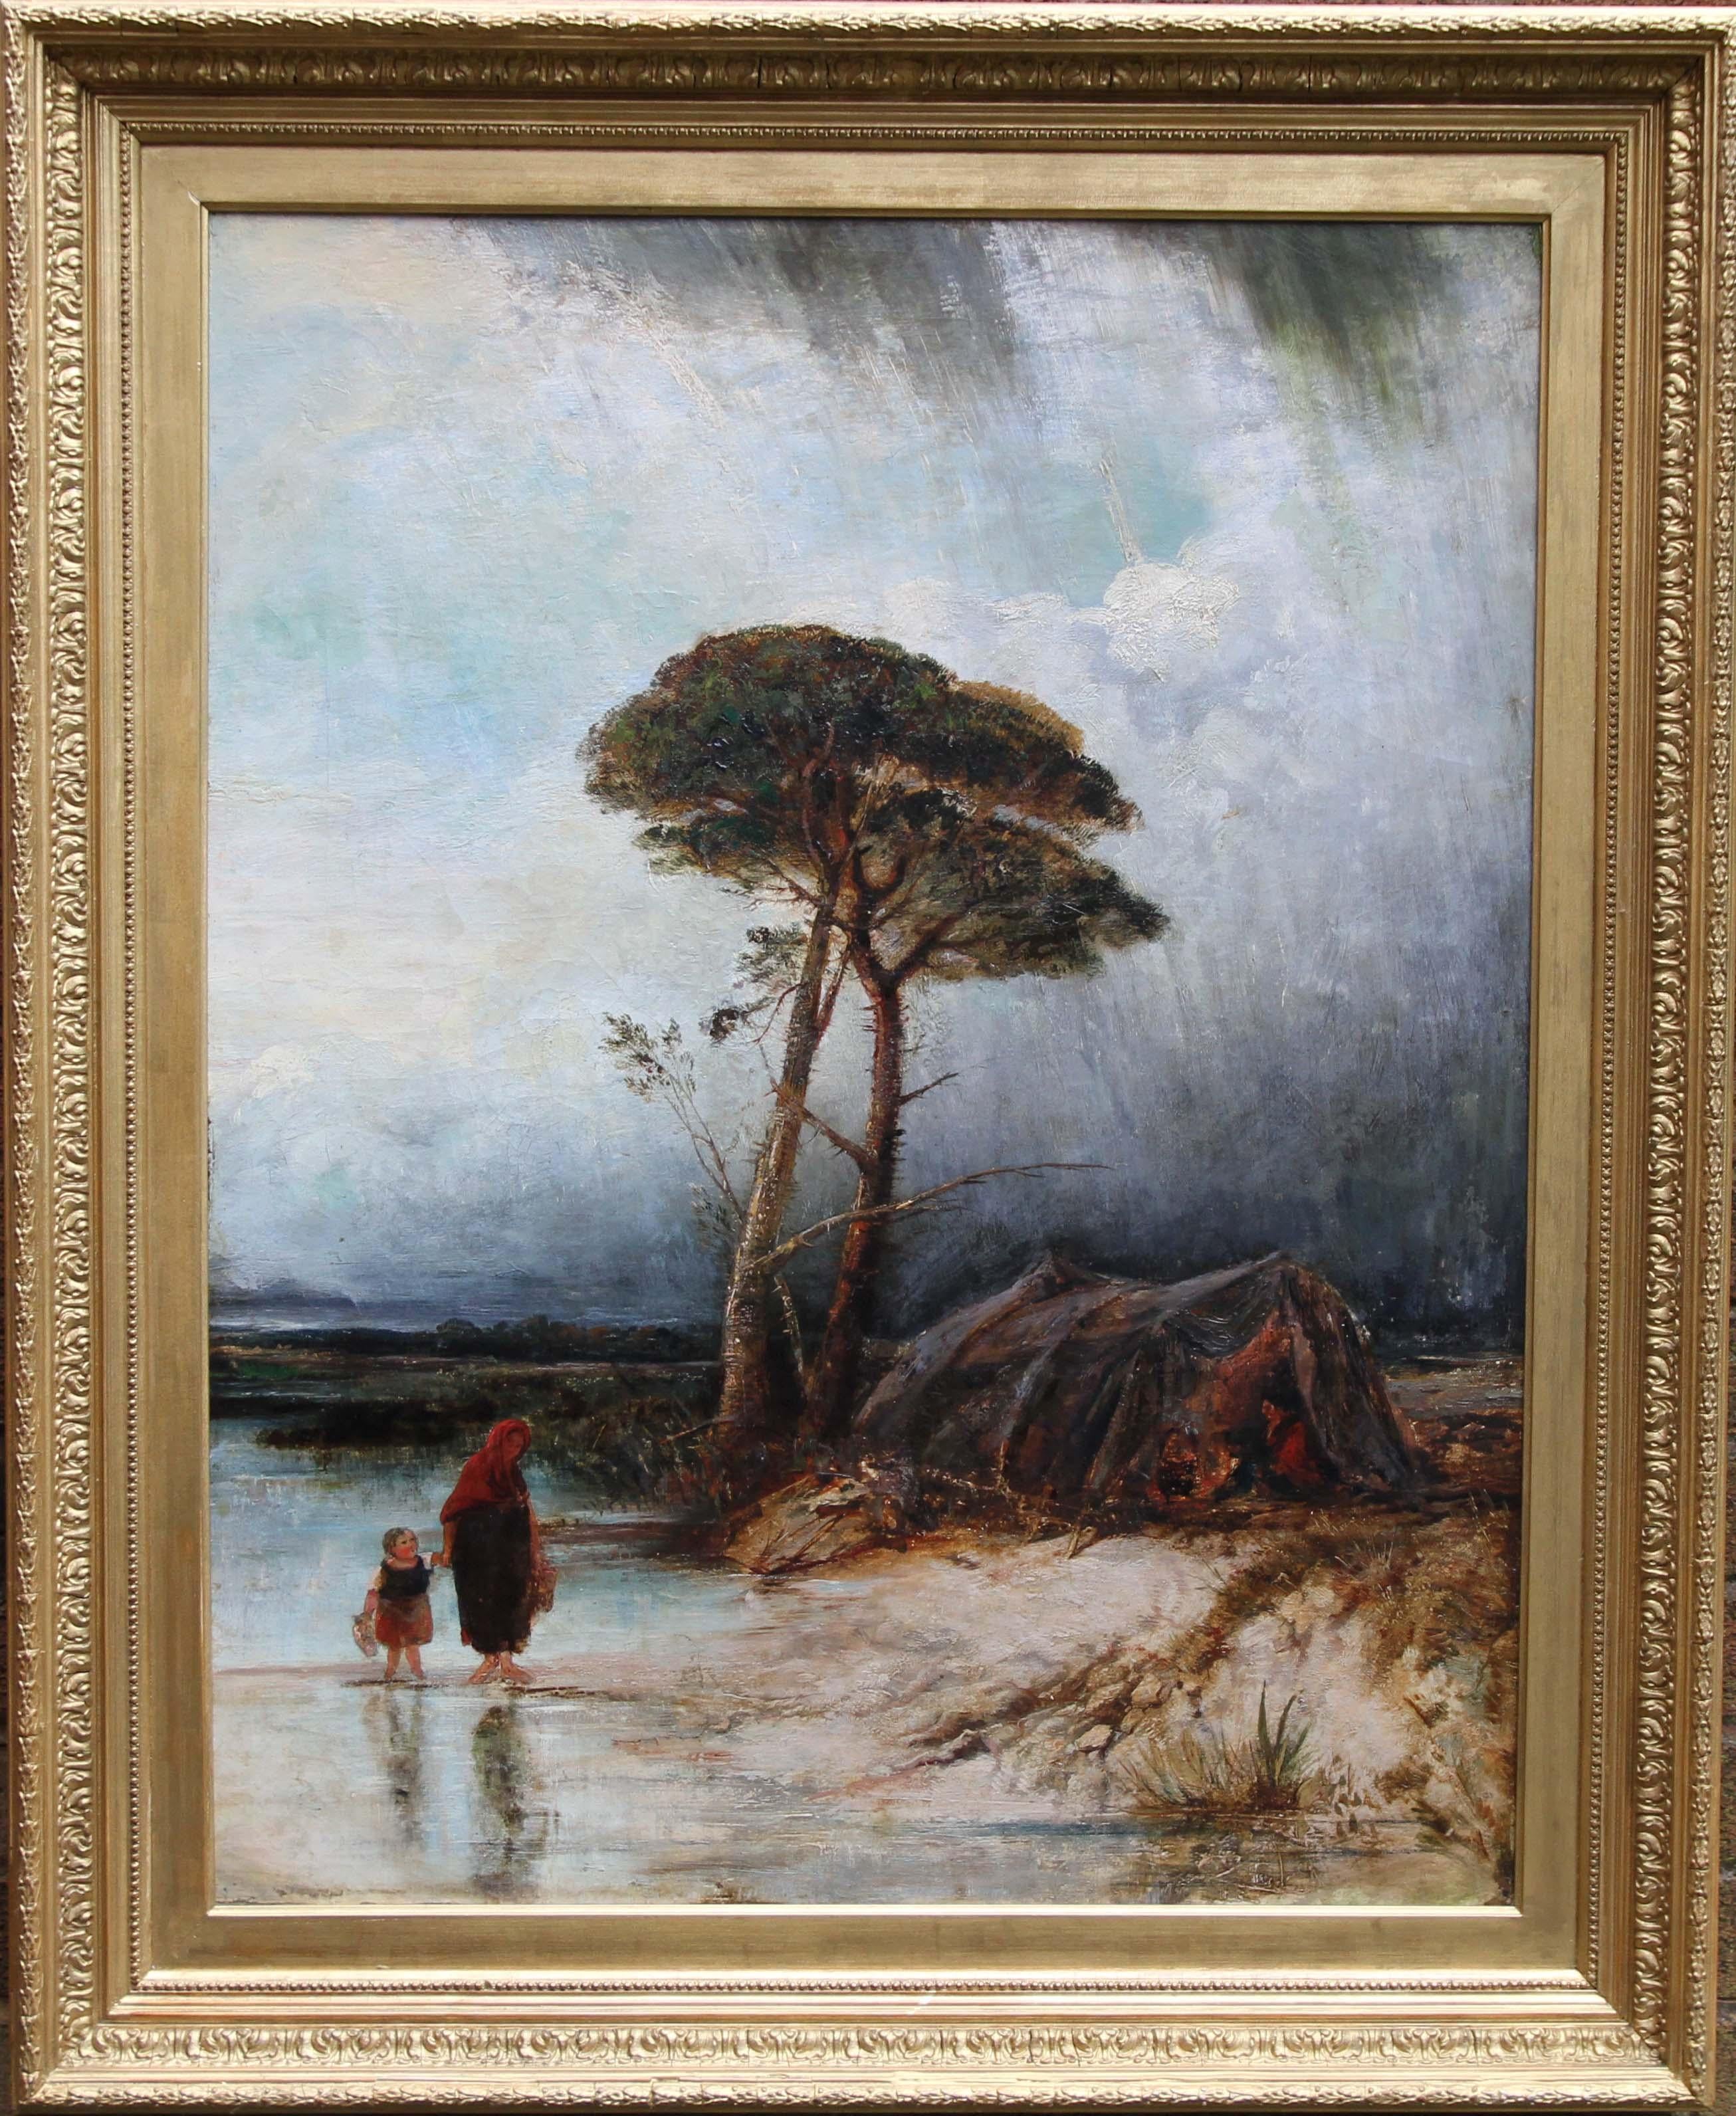 (Circle of) David Cox Figurative Painting - Rainy Landscape - Impressionist Victorian art oil painting famous weather artist